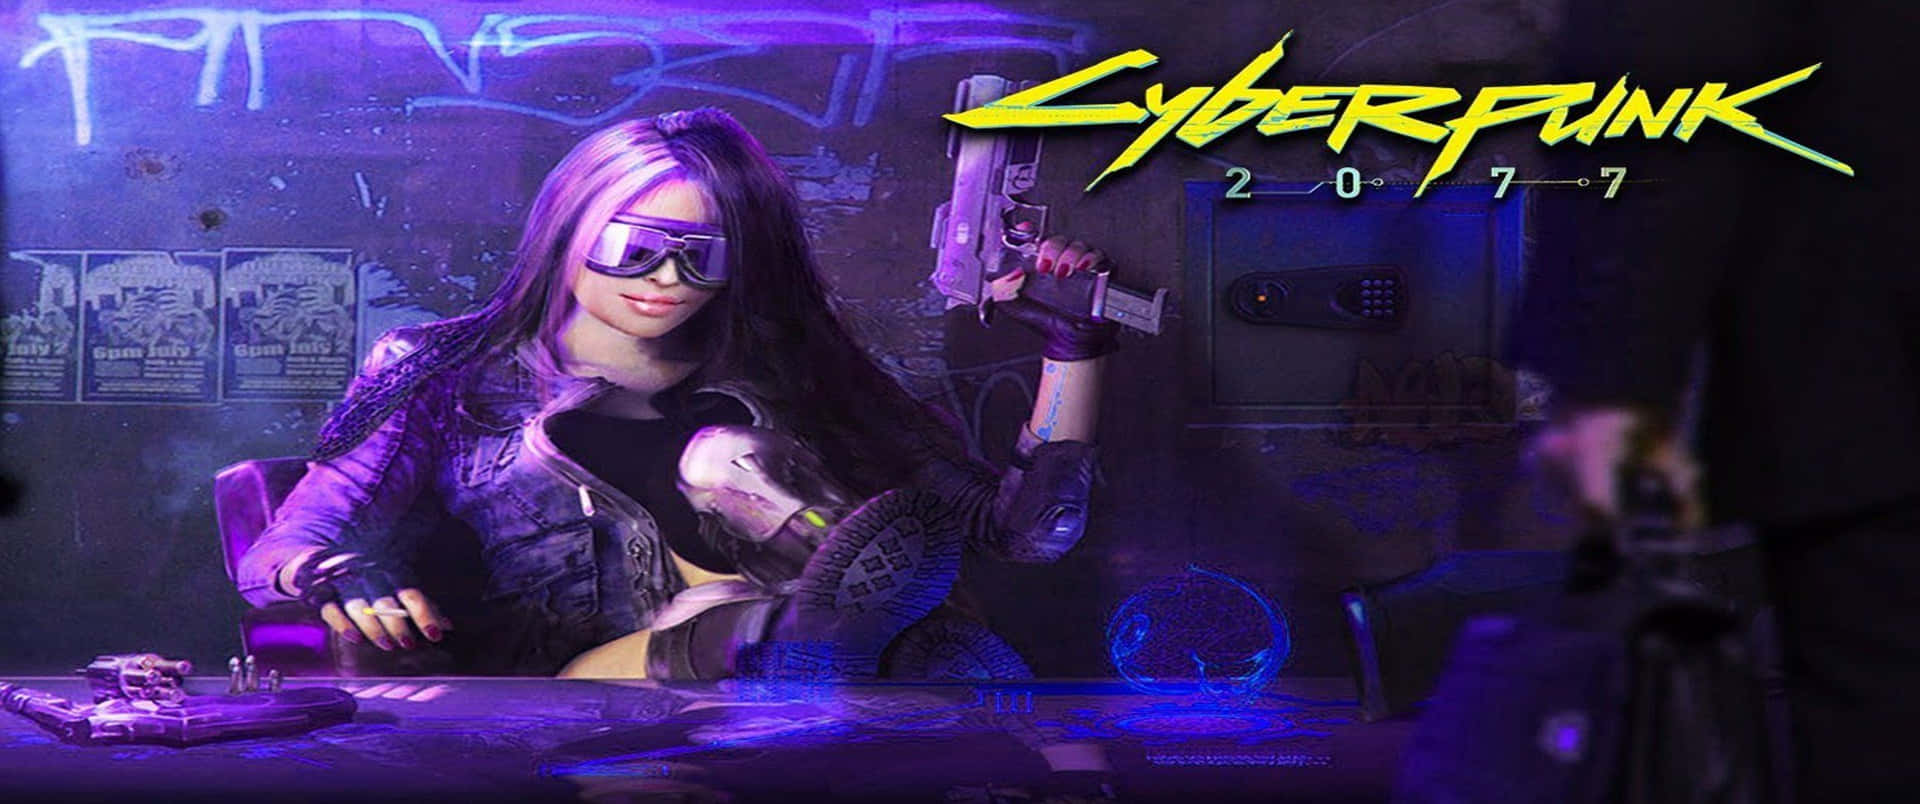 3440x1440p Cyberpunk 2077 Background Girl Wearing Sunglasses